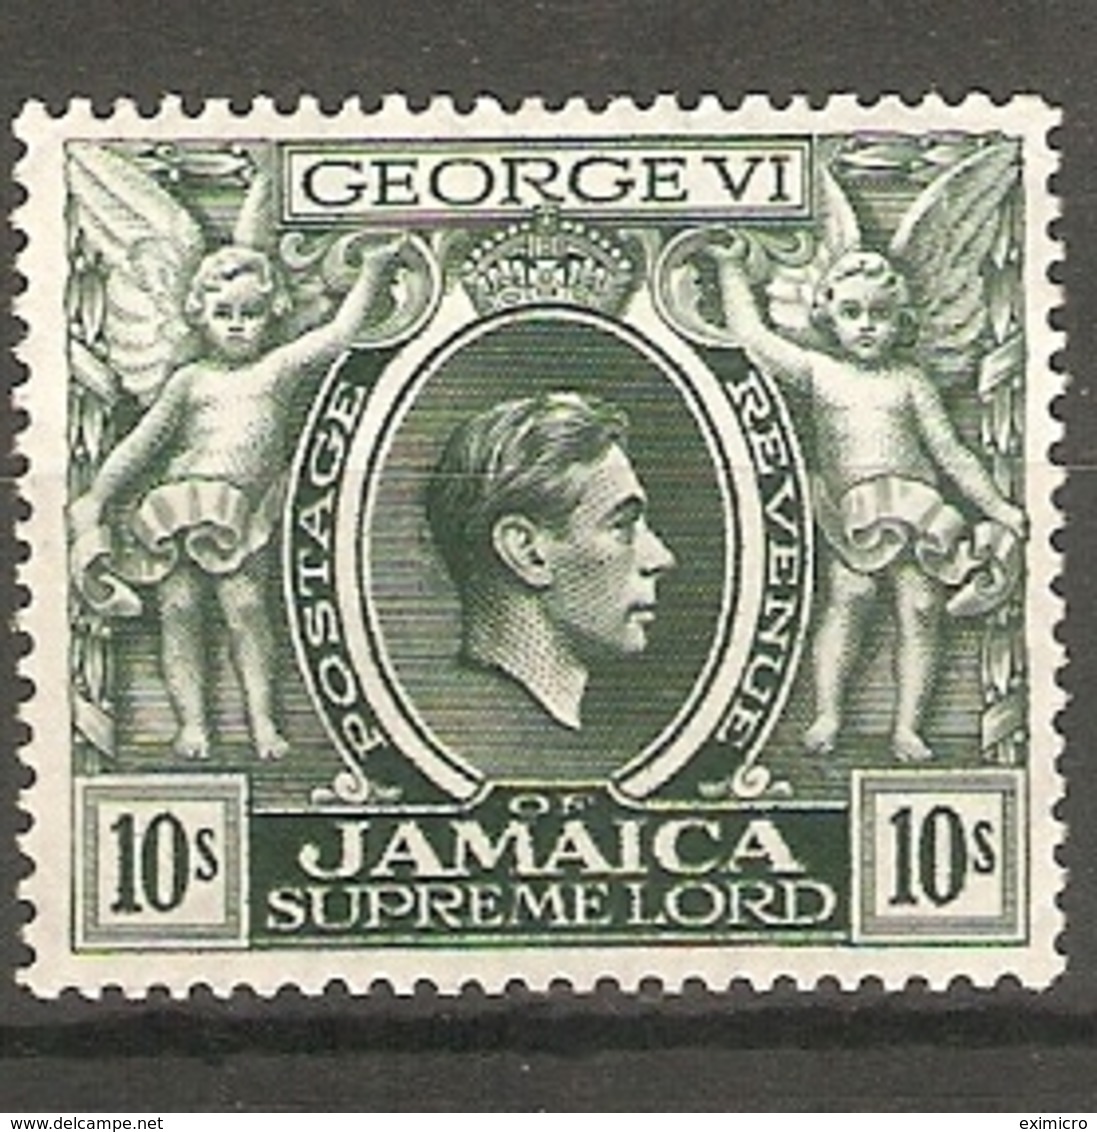 JAMAICA 1938 10s SG 133 MINT NEVER HINGED Cat £11 - Jamaica (...-1961)